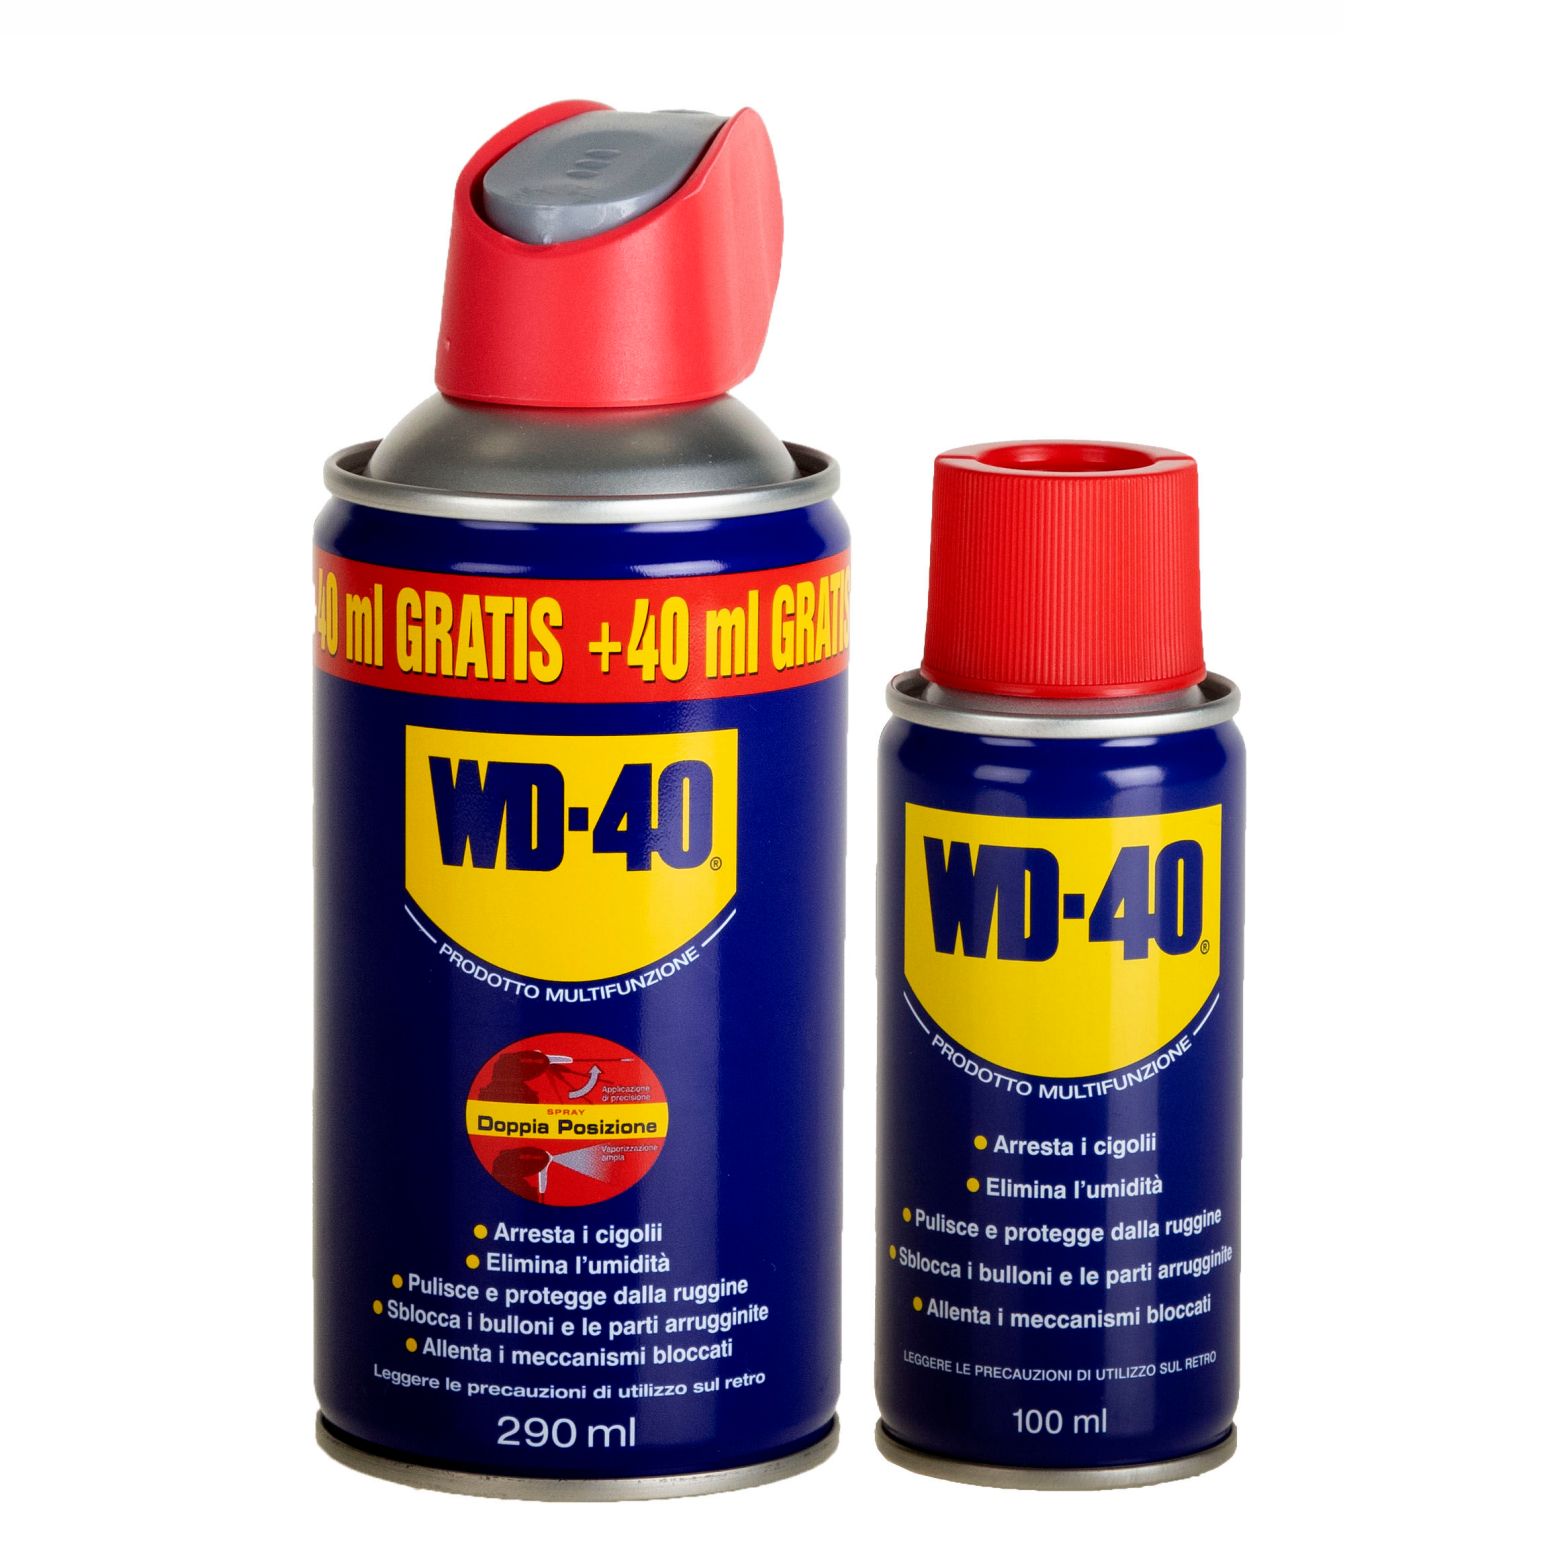 Wd 40 состав. - WD-40 100ml. Lubricant # WD-40. Спрей ВД-40. WD-40 bigd40/100.